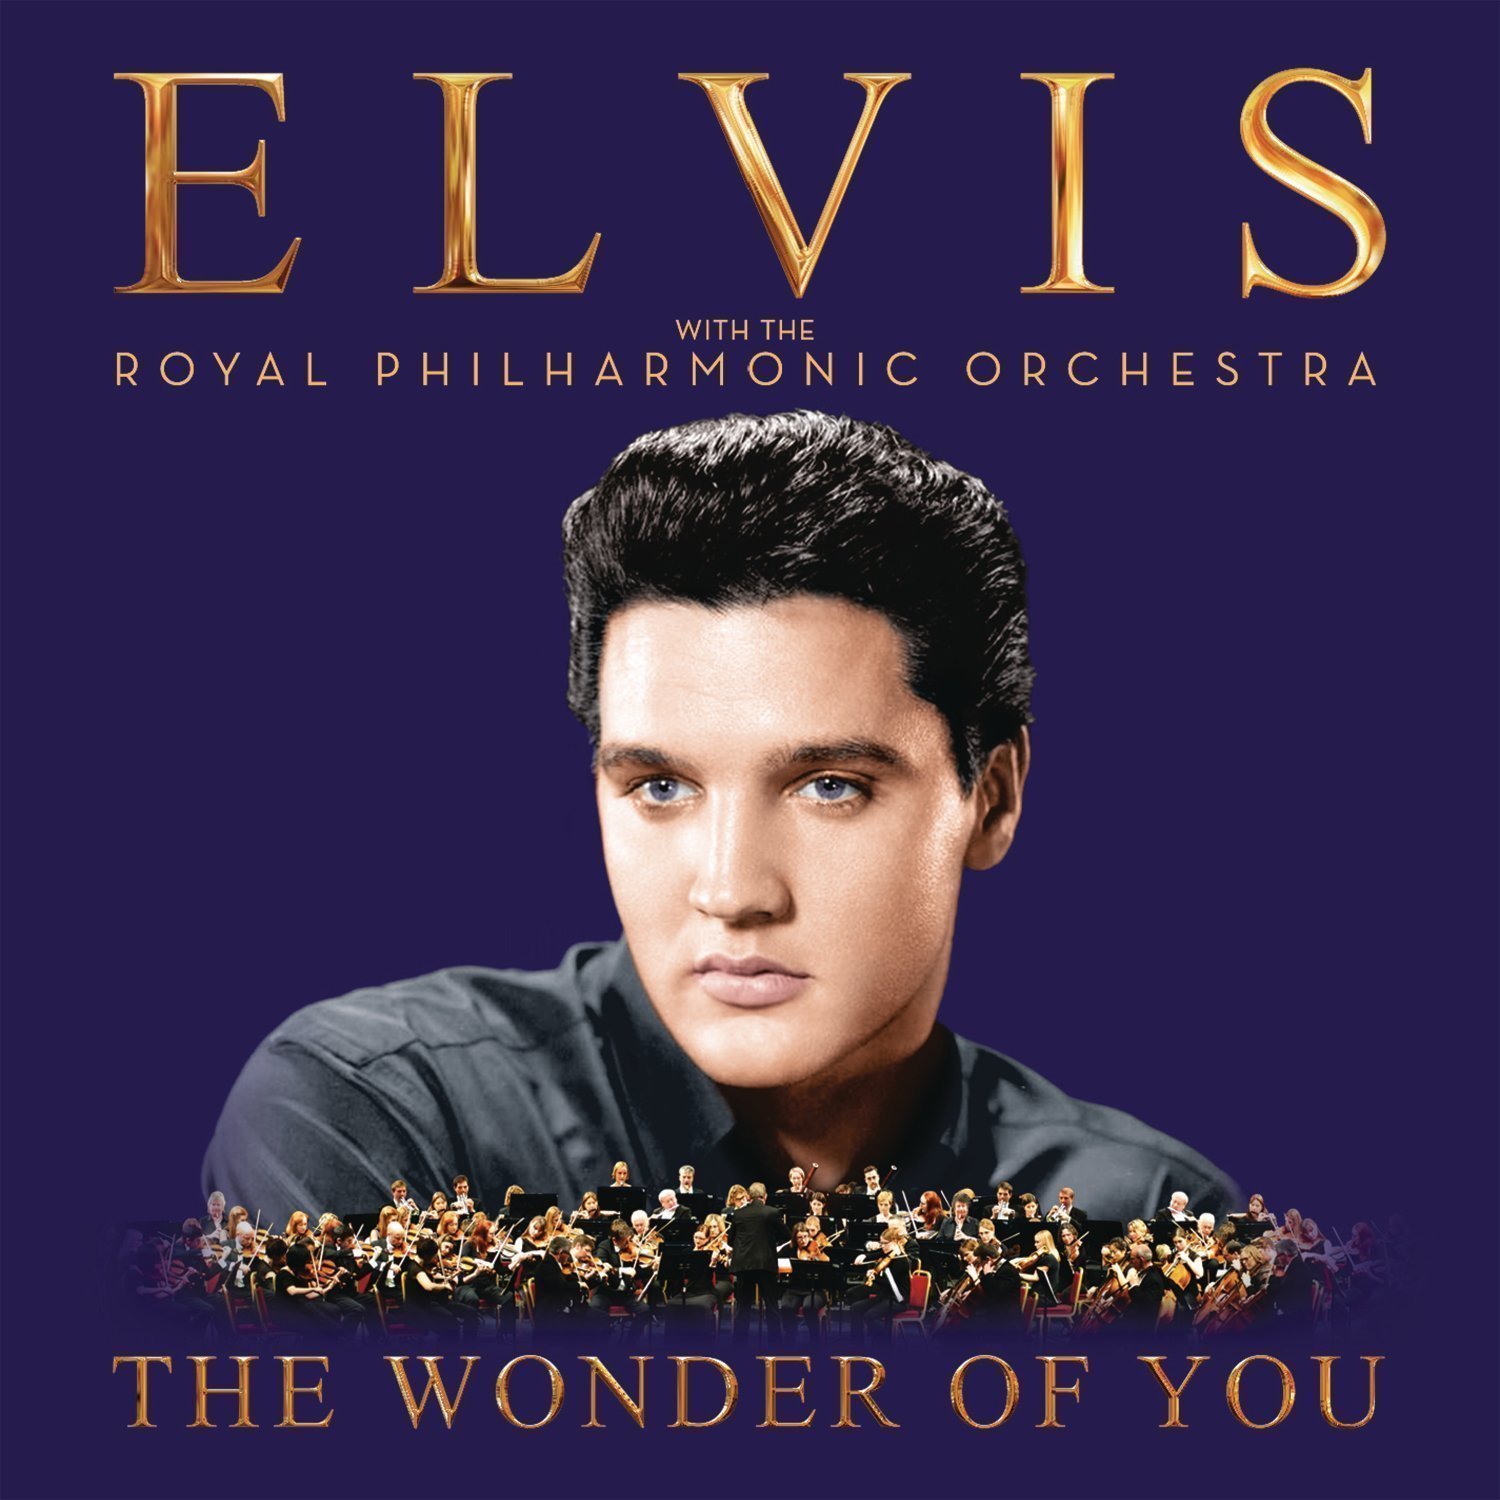 Vinyl Record Elvis Presley Wonder of You: Elvis Presley With the Royal Philharmonic Orchestra (Gatefold Sleeve) (2 LP)